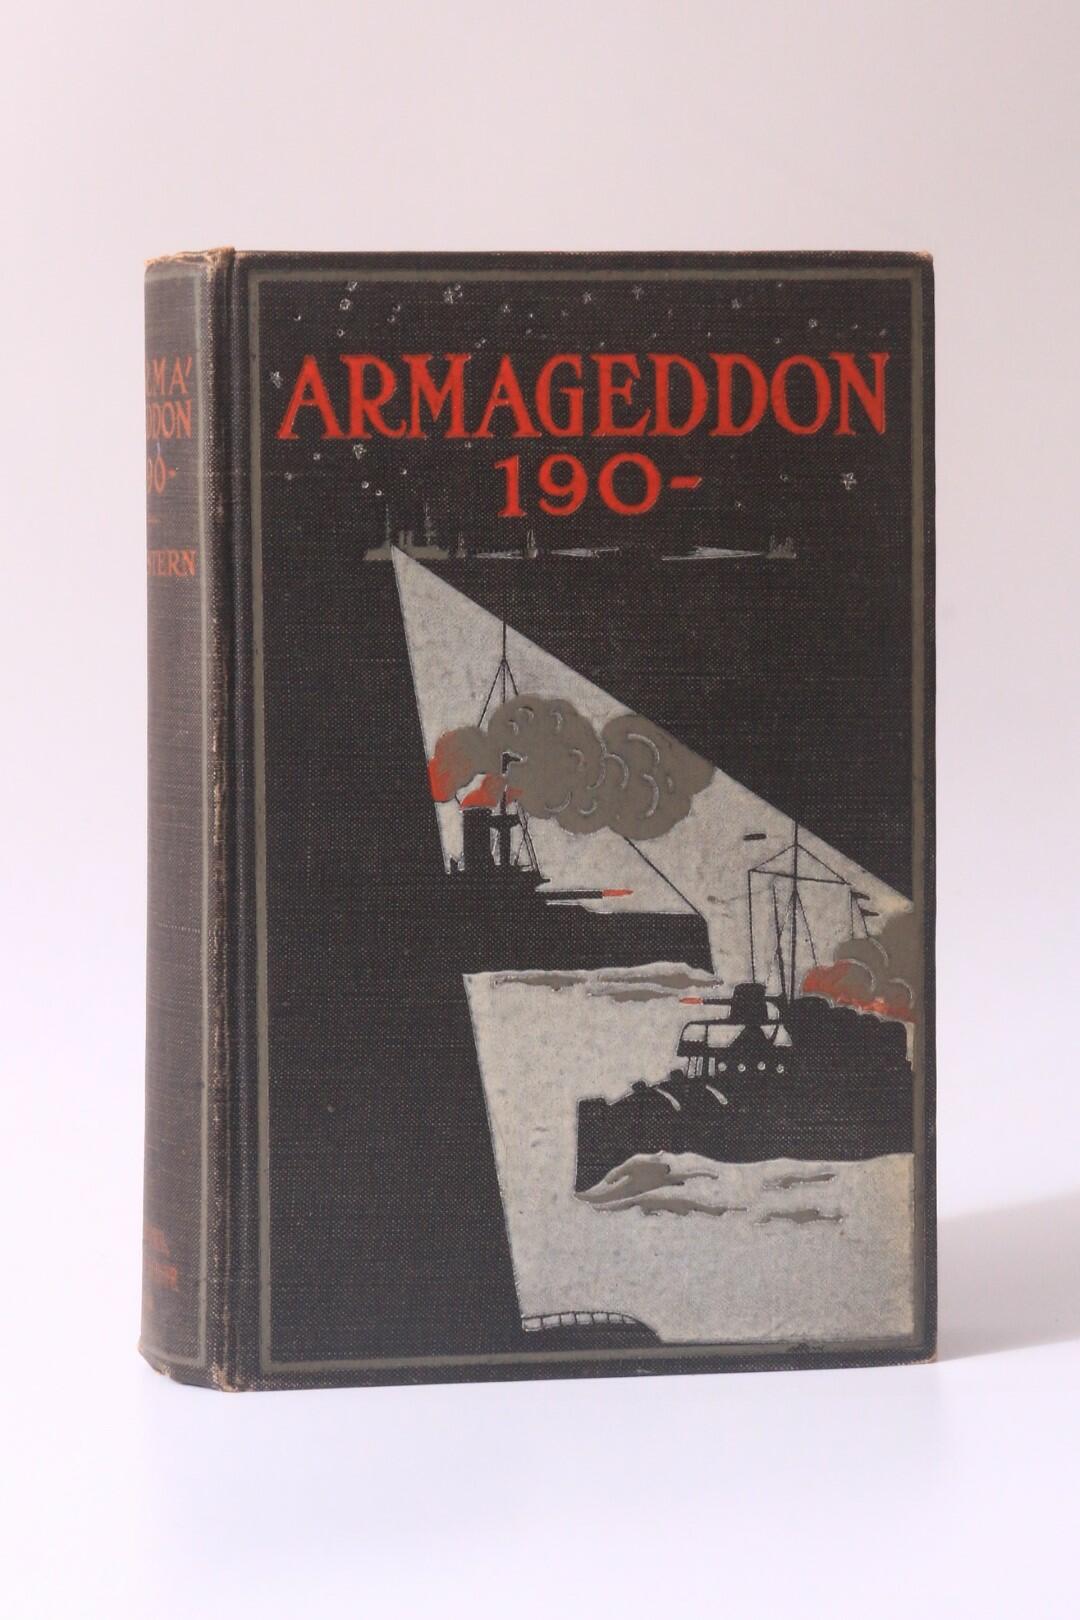 Seestern [Ferdinand H. Grautoff] - Armageddon 190- - Kegan, Paul, Trench, Trubner & Co., 1907, First Edition.